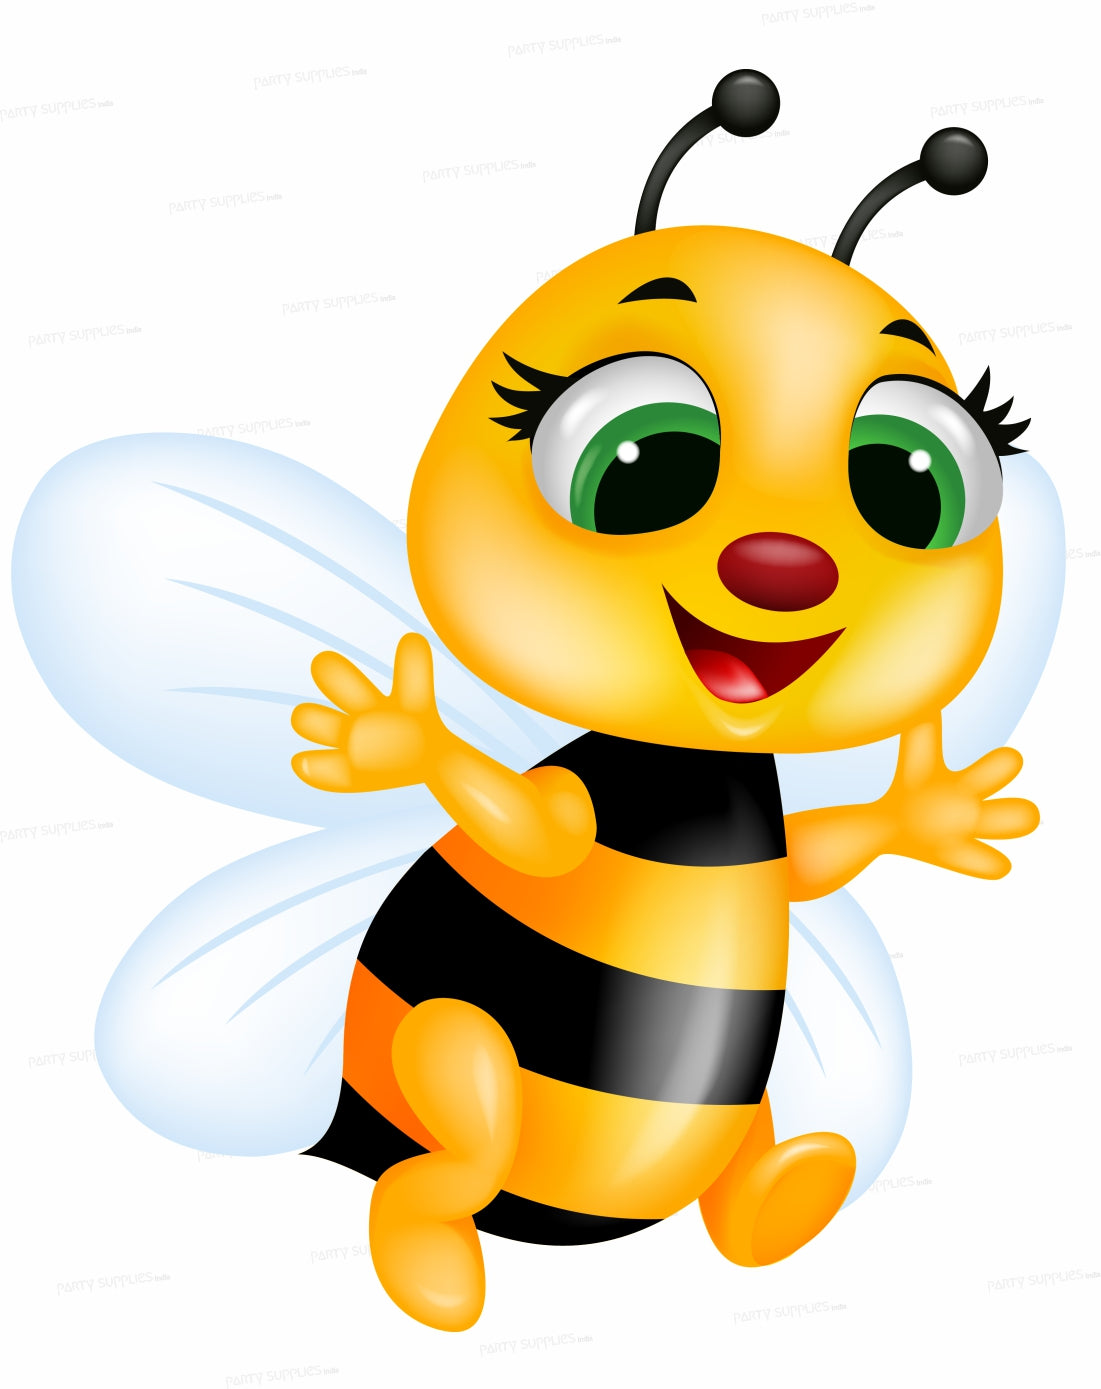 PSI Bumble Bee Theme Cutout - 02